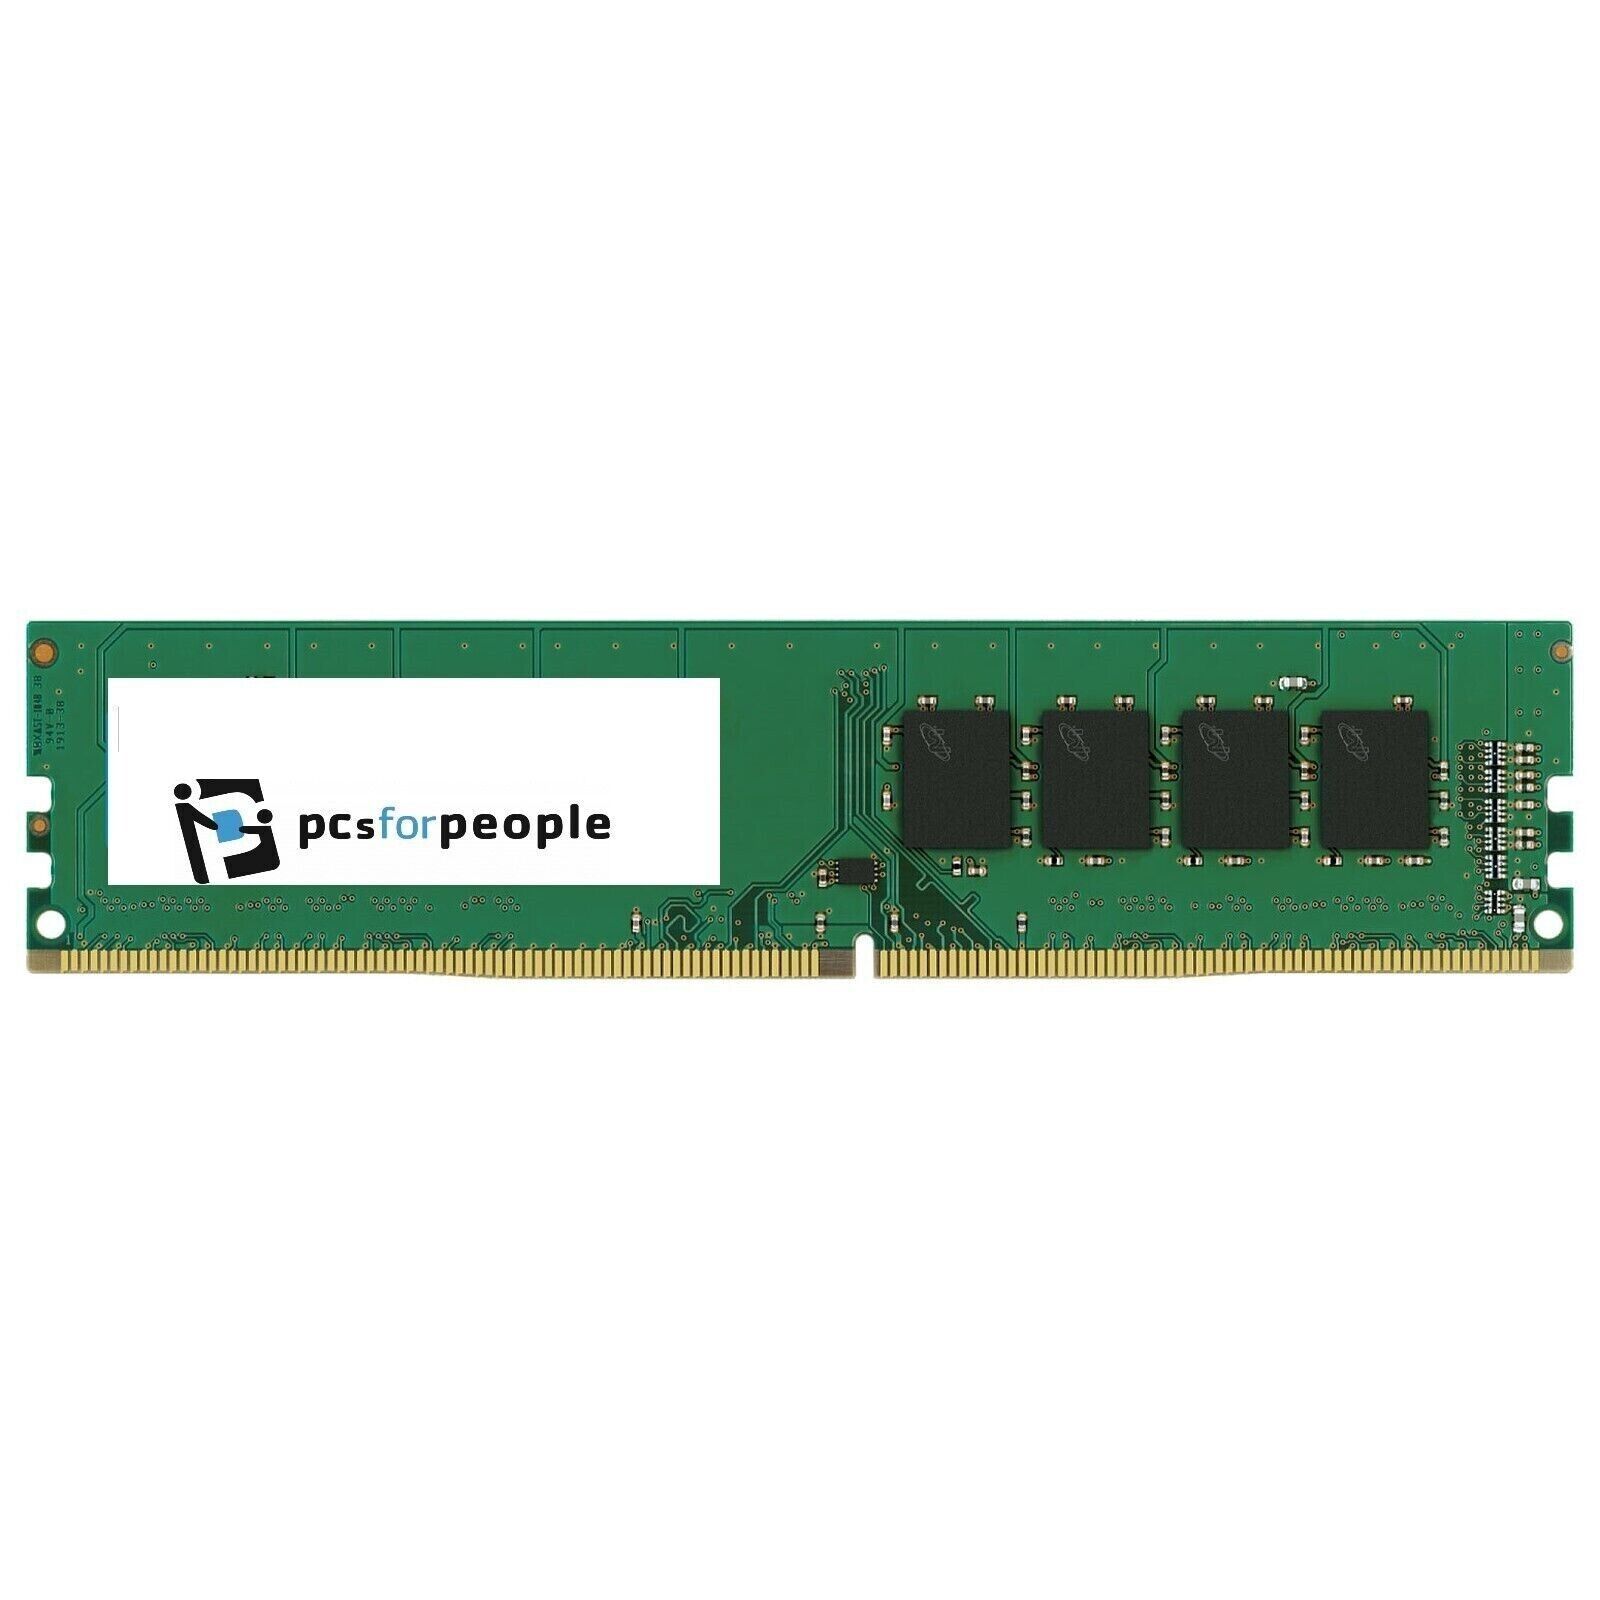 Lot of 10 4GB PC3-12800 Desktop Ram Mixed Brands